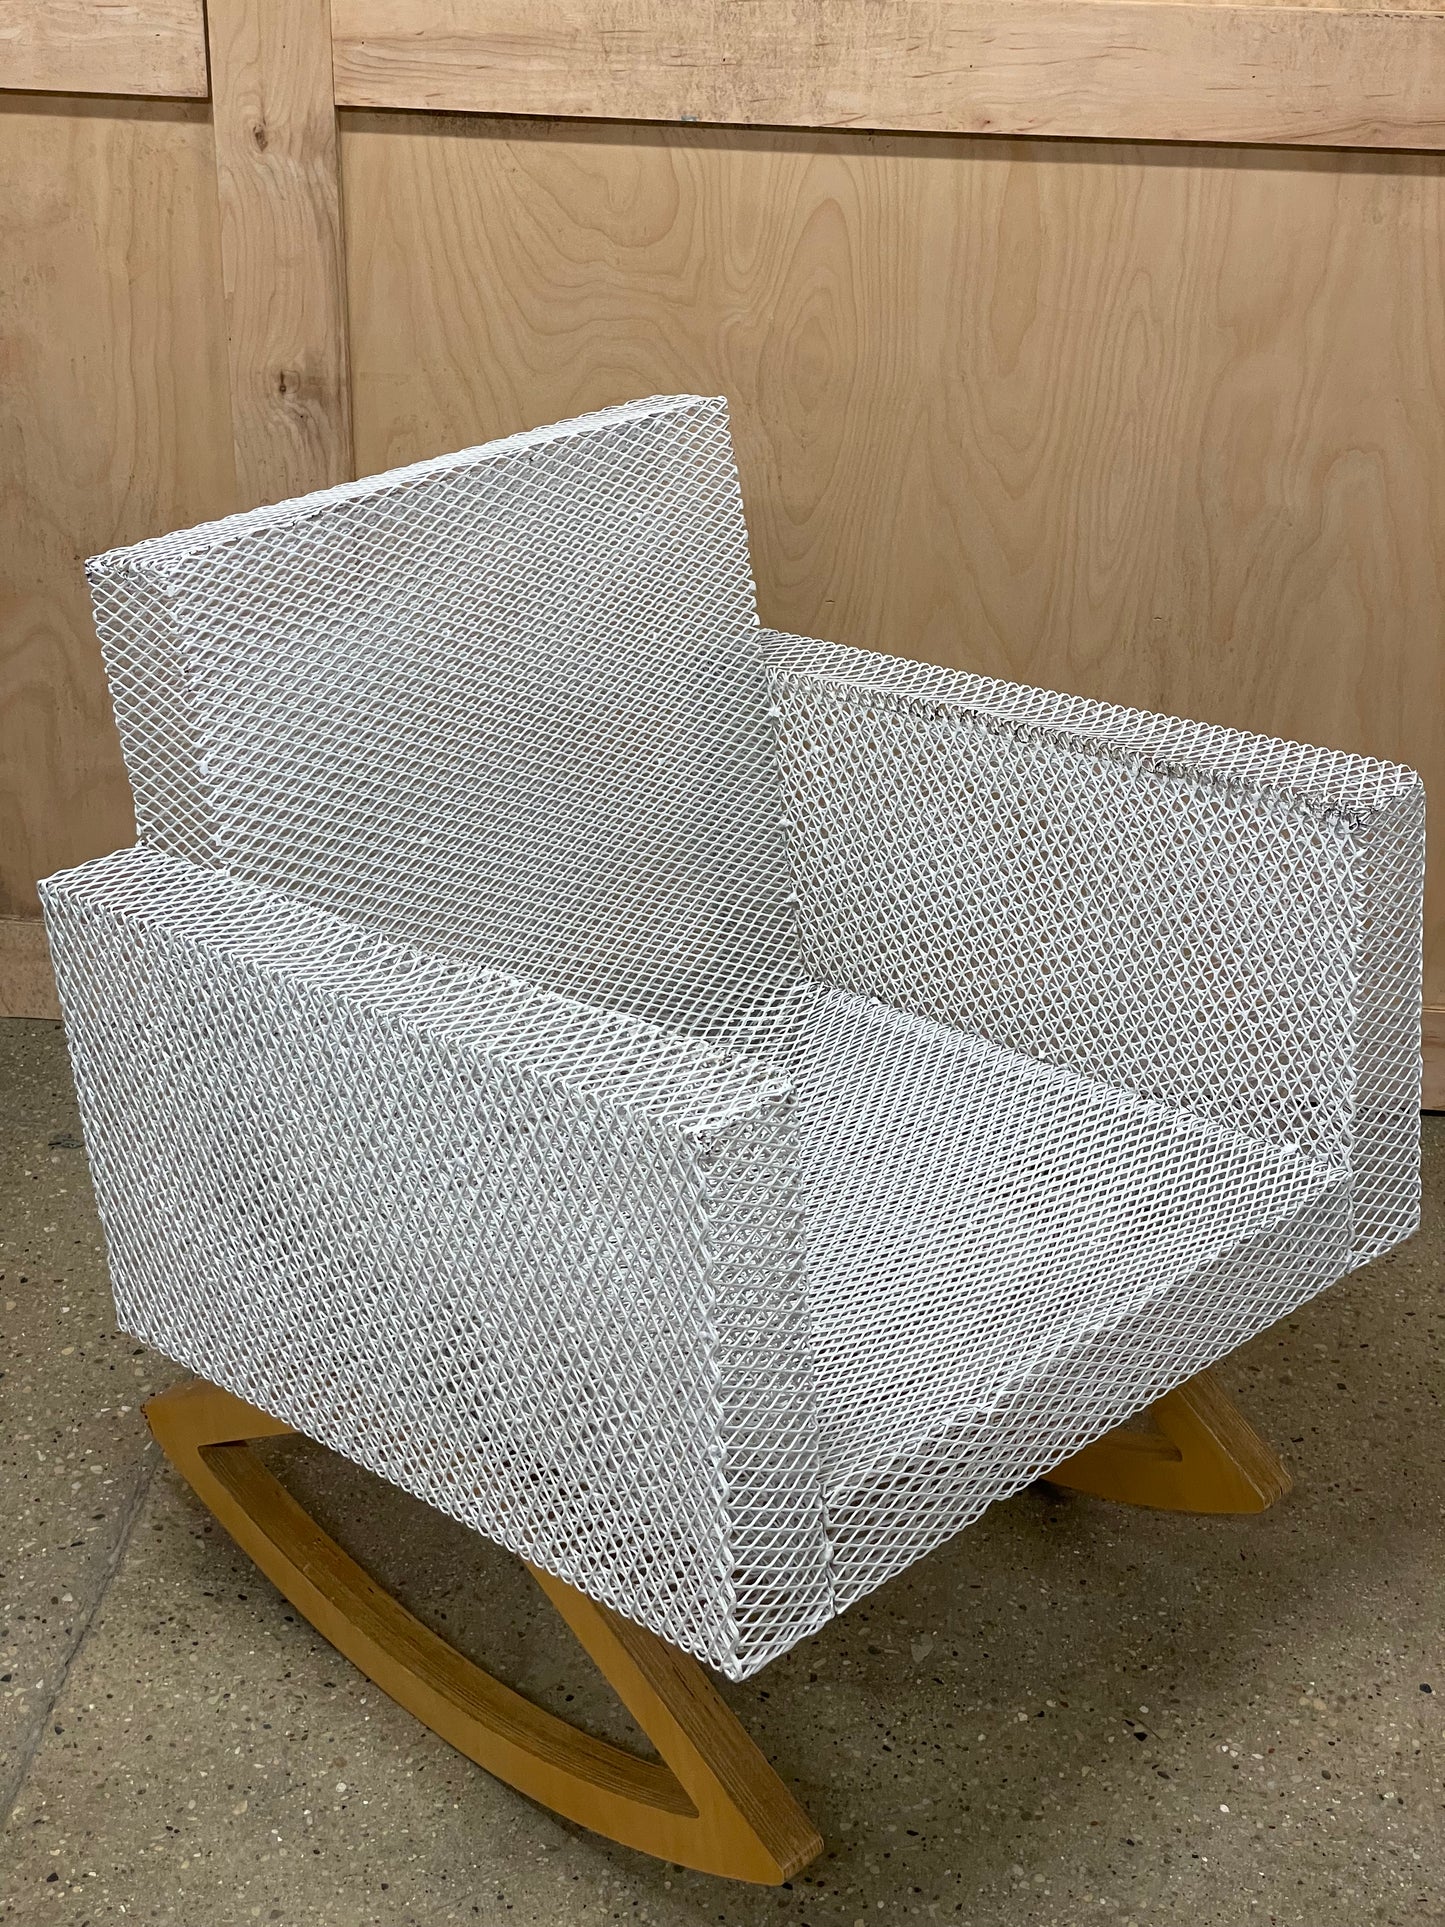 Custom made wire mesh rocking chair